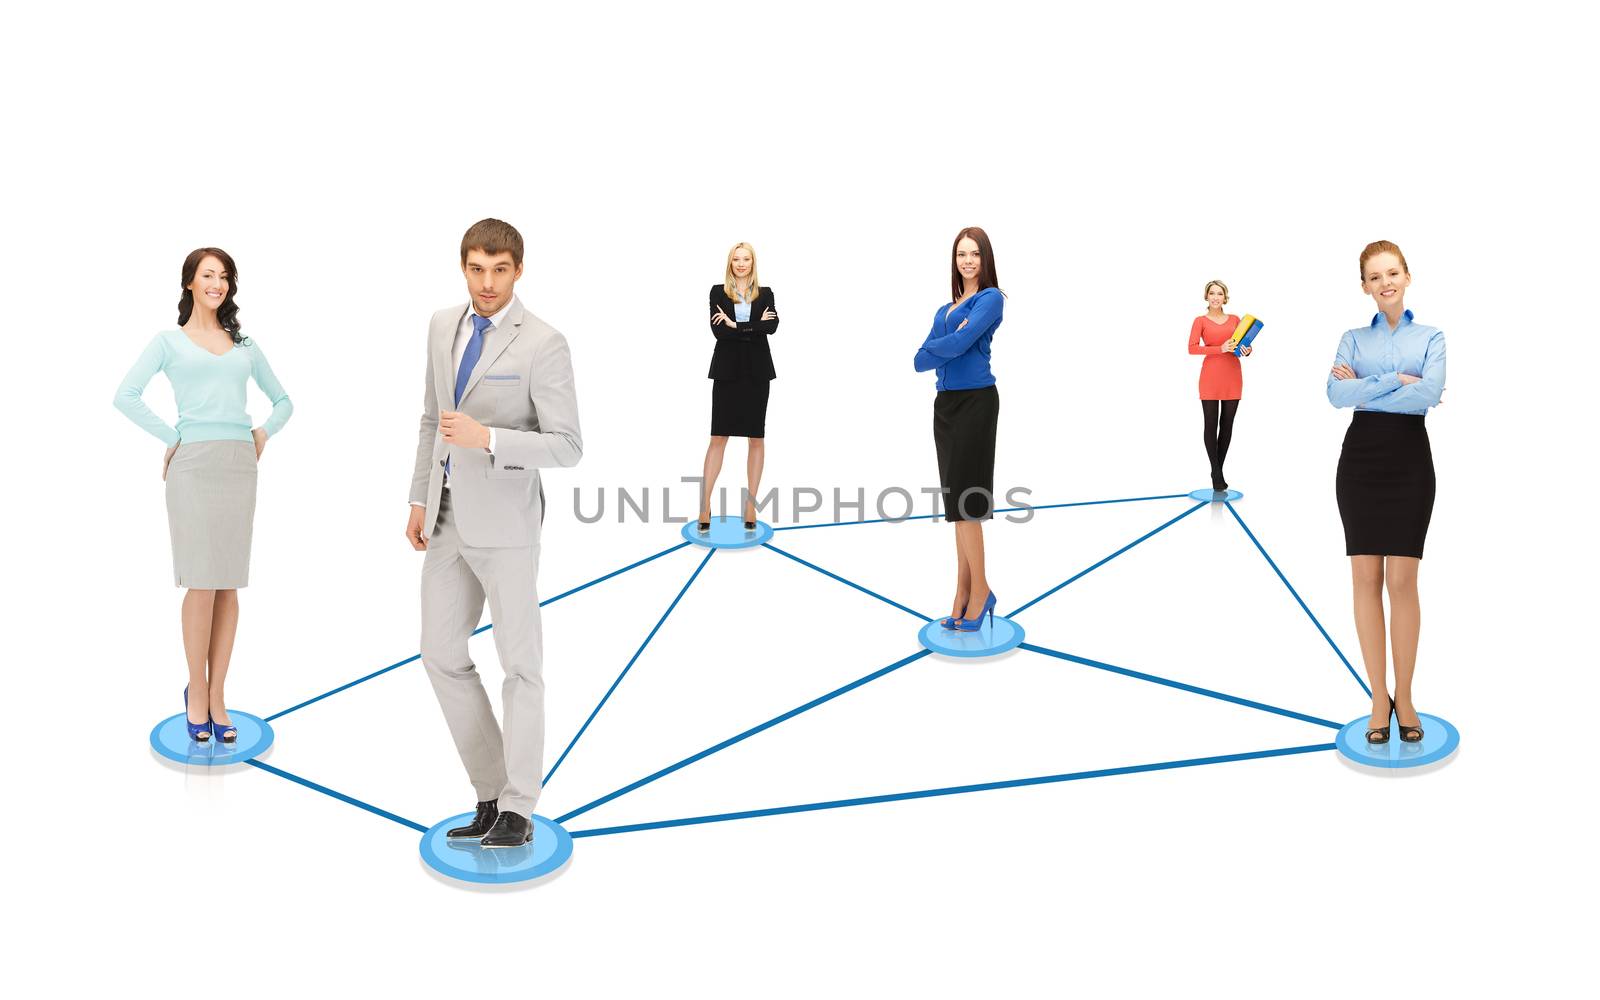 social or business network by dolgachov